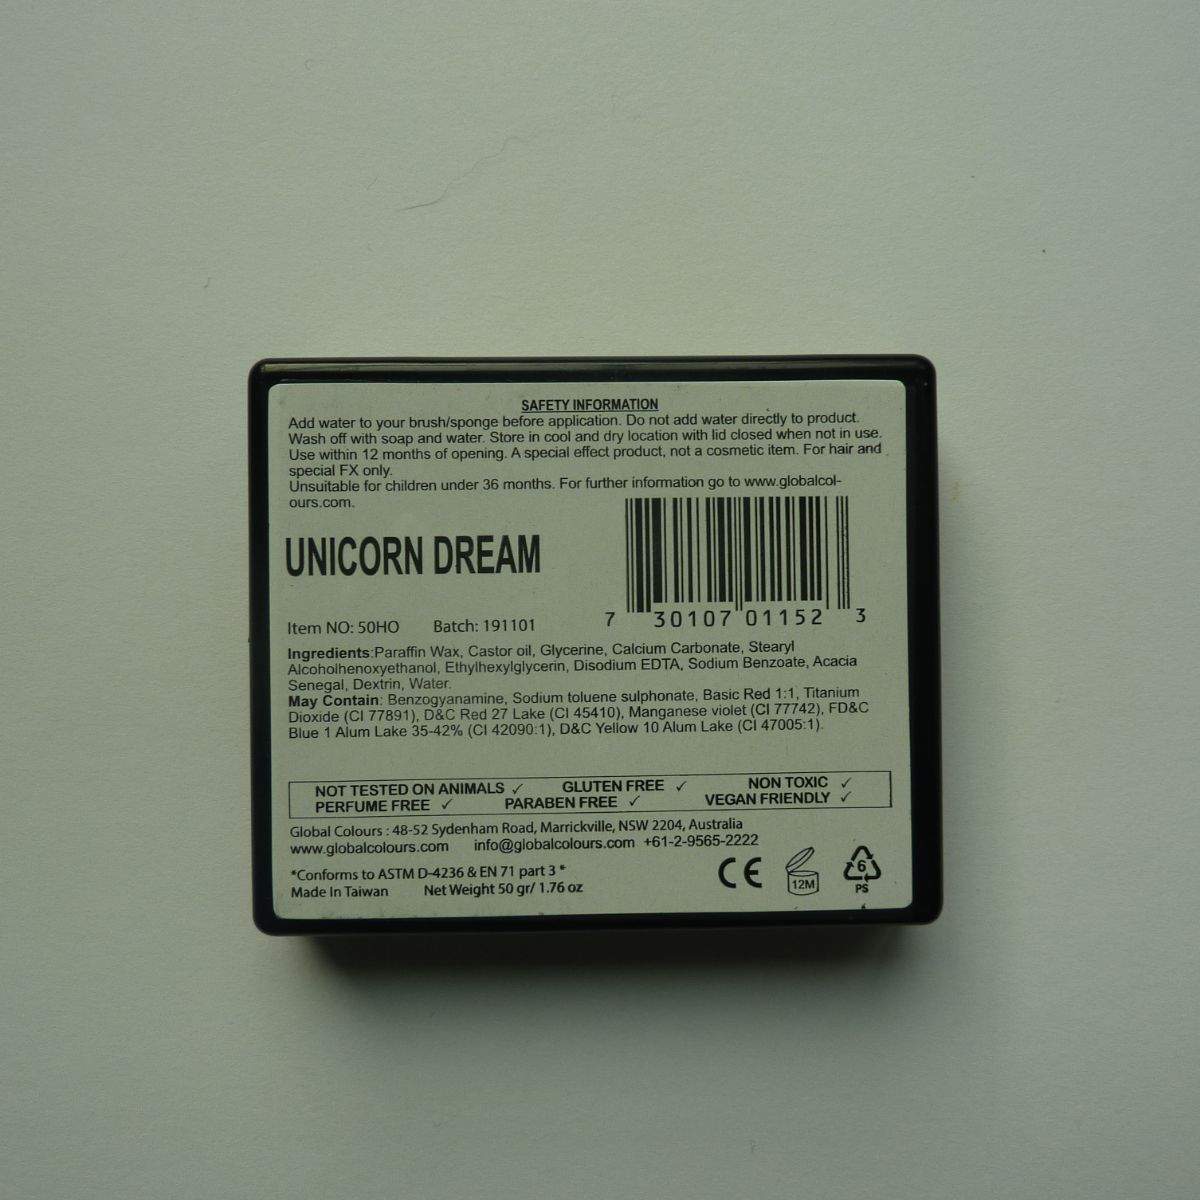 Splitcake "Unicorn Dream"